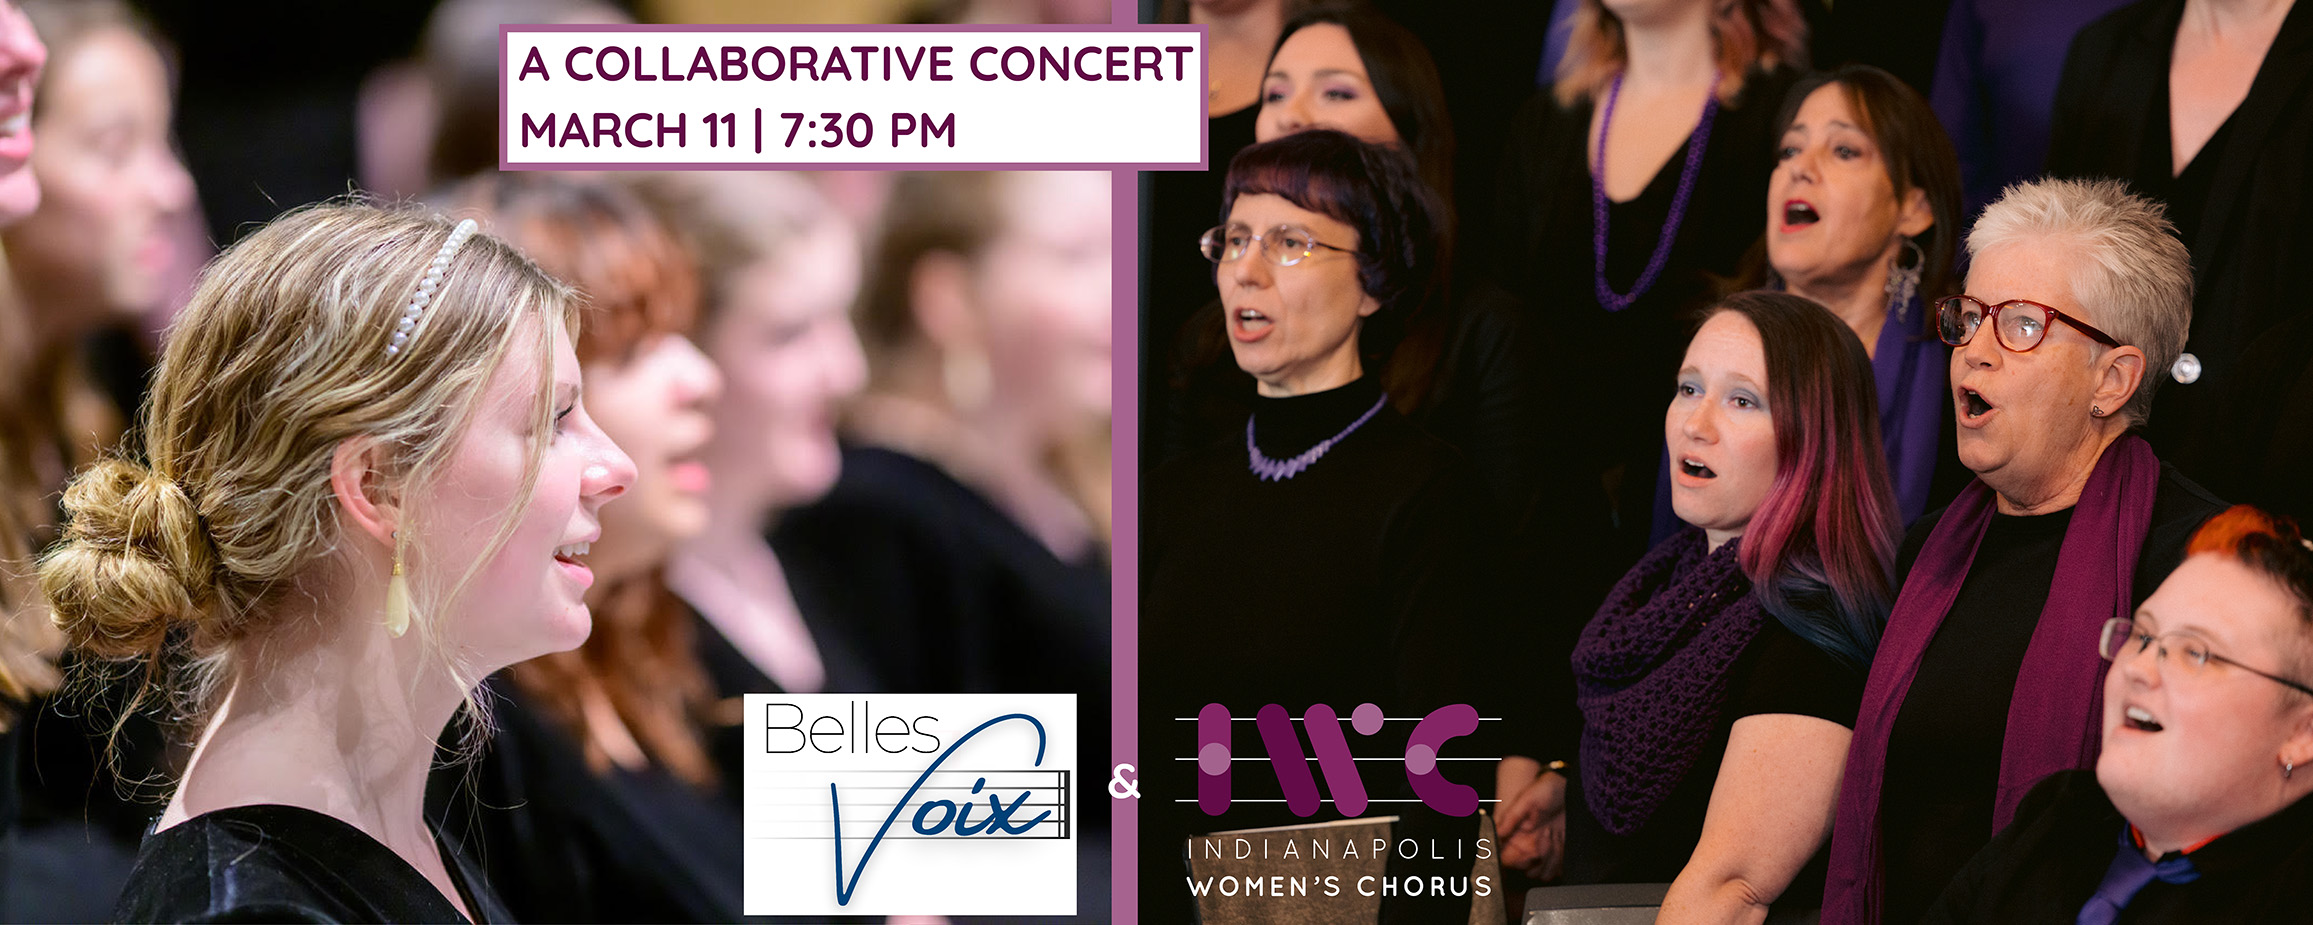 Joint Concert: IWC & Belles Voix treble choir, St. Mary's College